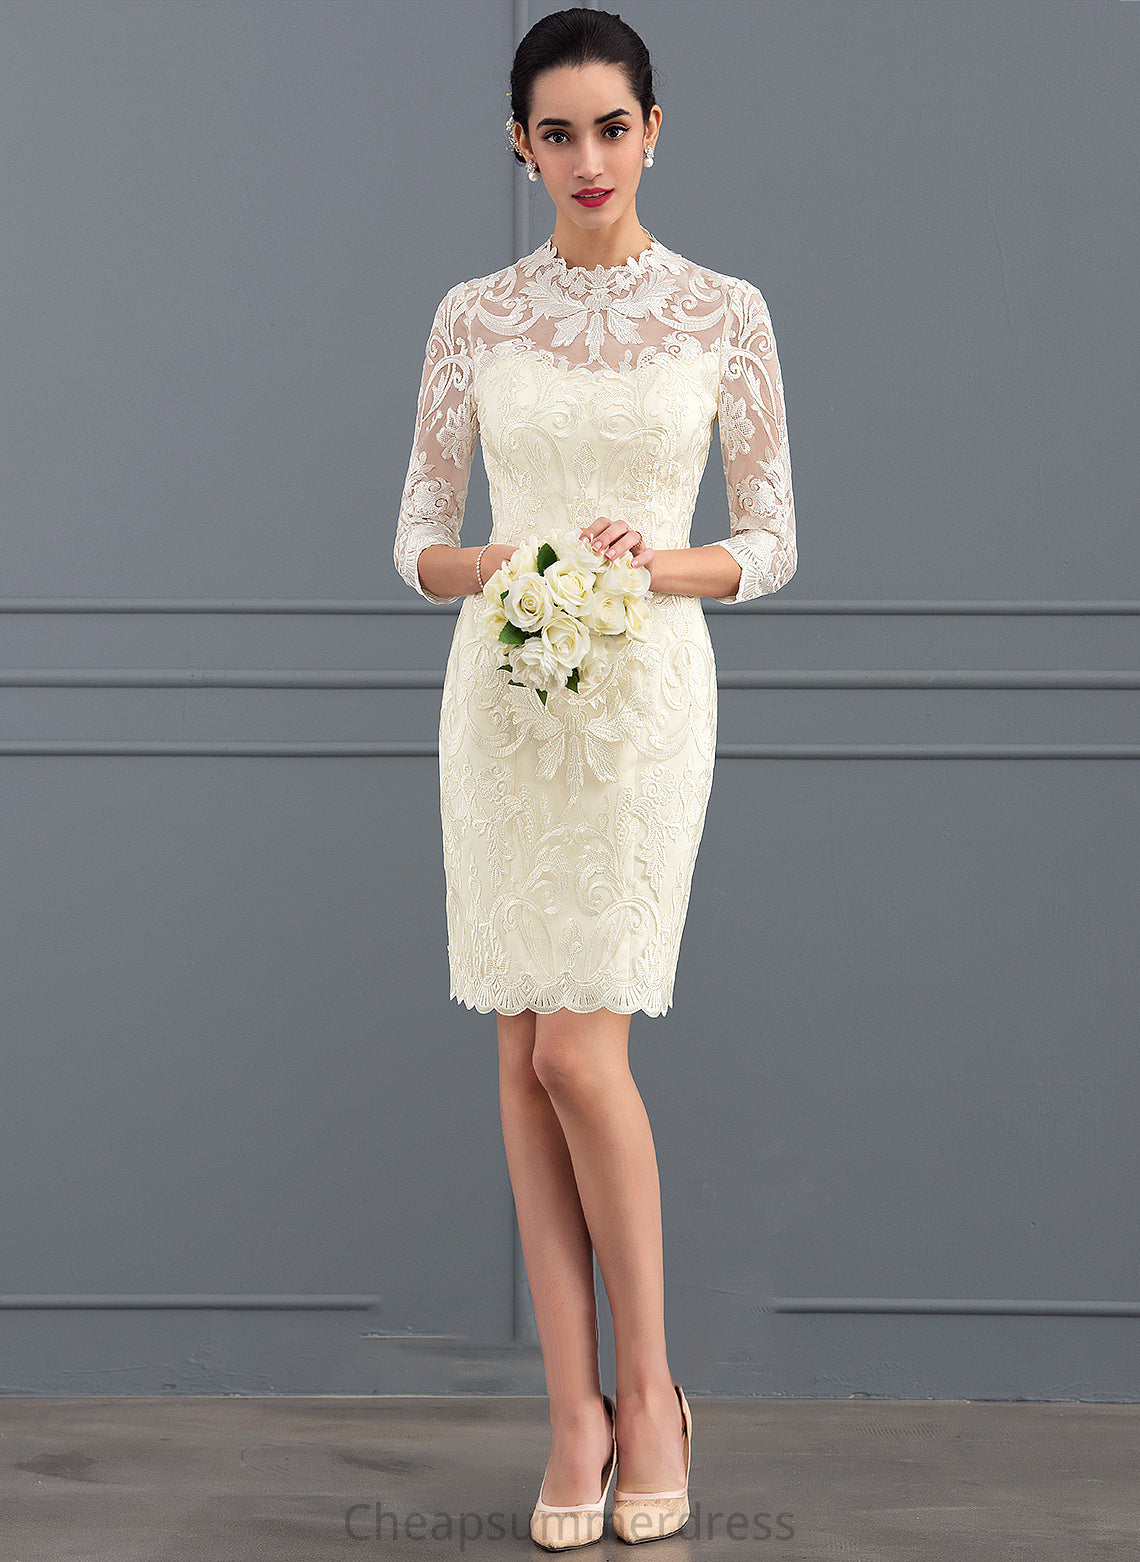 Dress Lace High Wedding Dresses Wedding Neck Sheath/Column Arianna Knee-Length